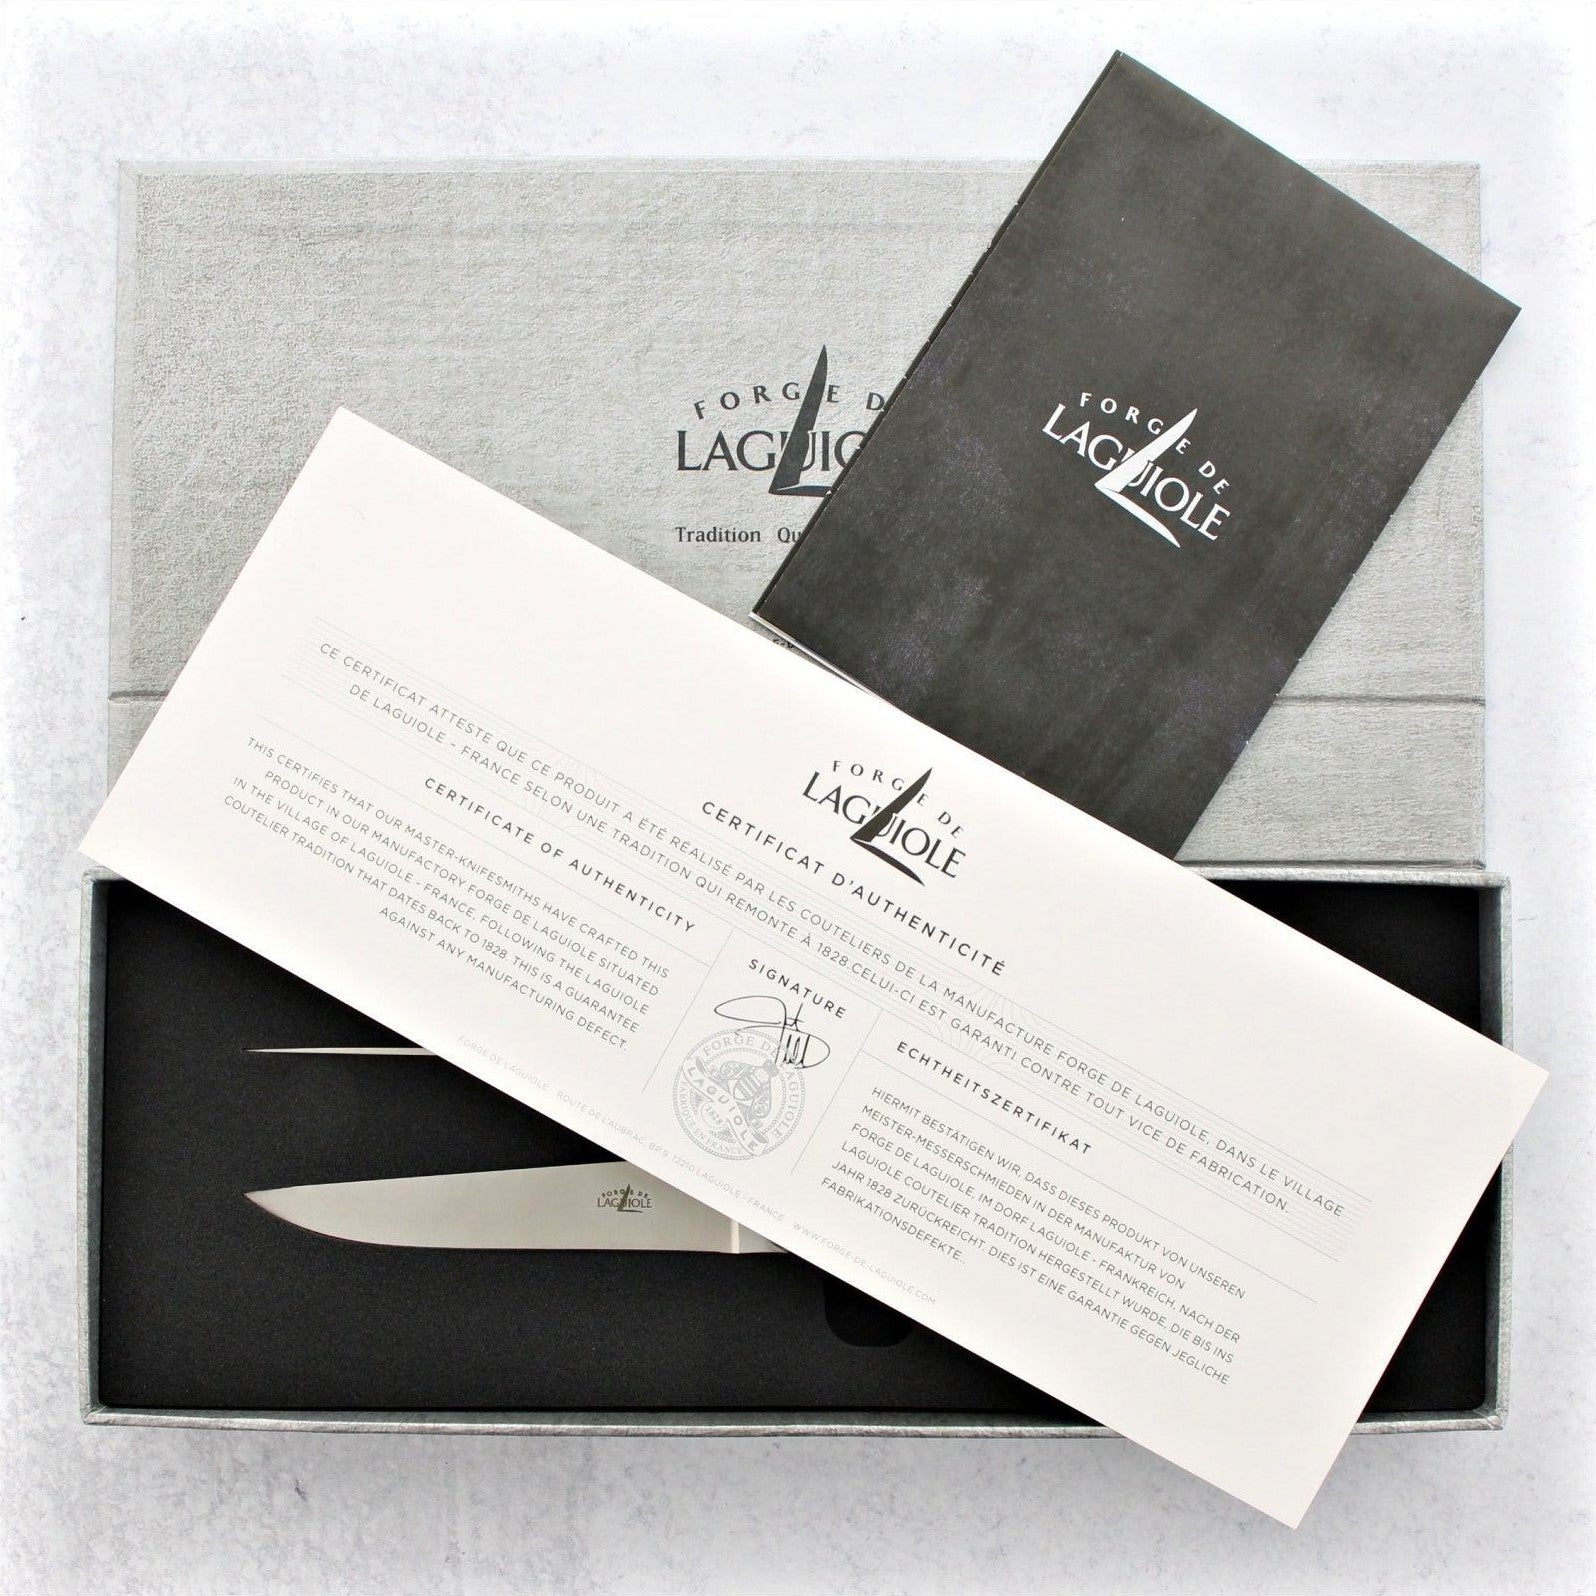 Forge de Laguiole 6 Piece Steak Knife Set Fabric Series Green